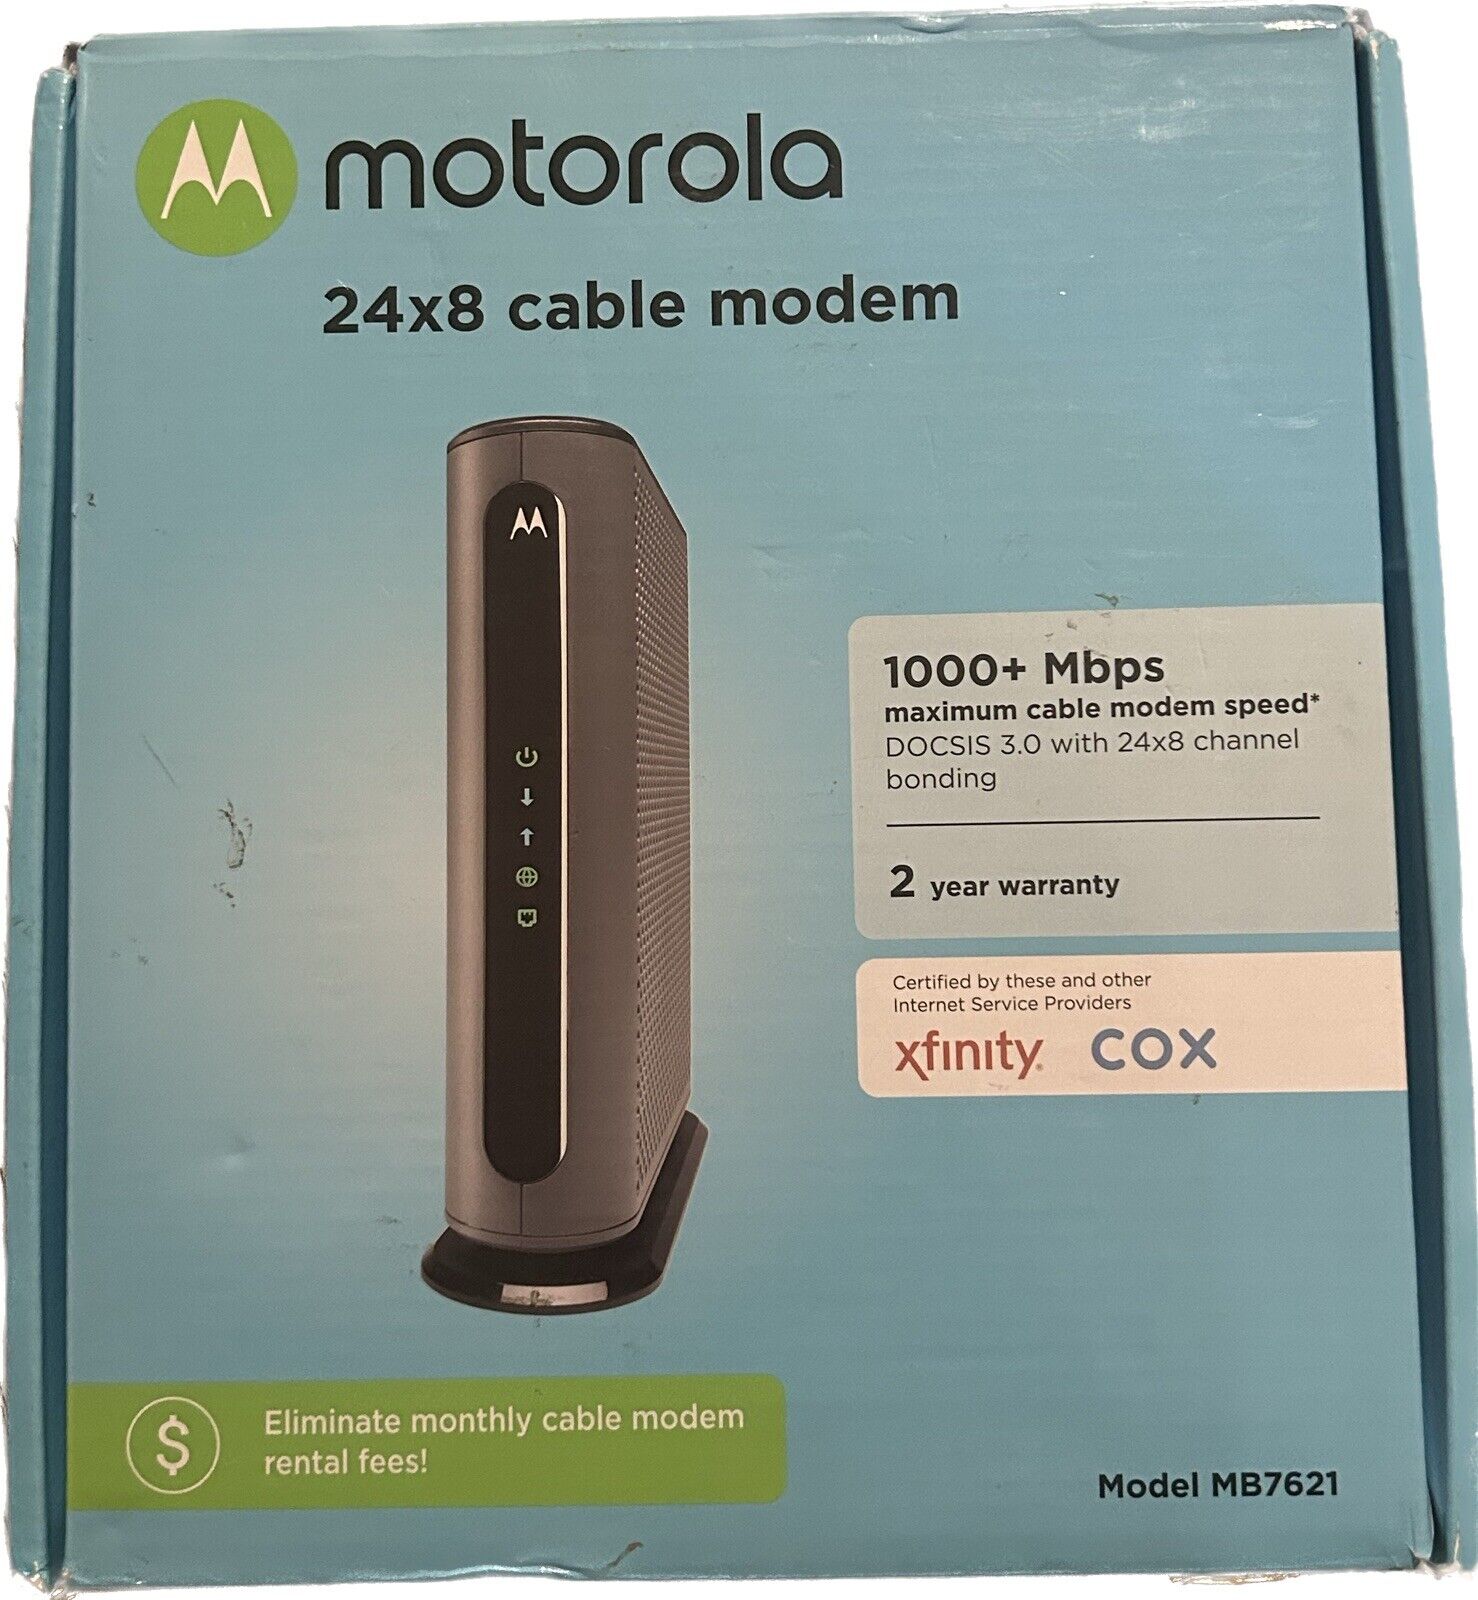 Motorola MB7621 Cable Modem 24x8 DOCSIS 3.0 New Open Box